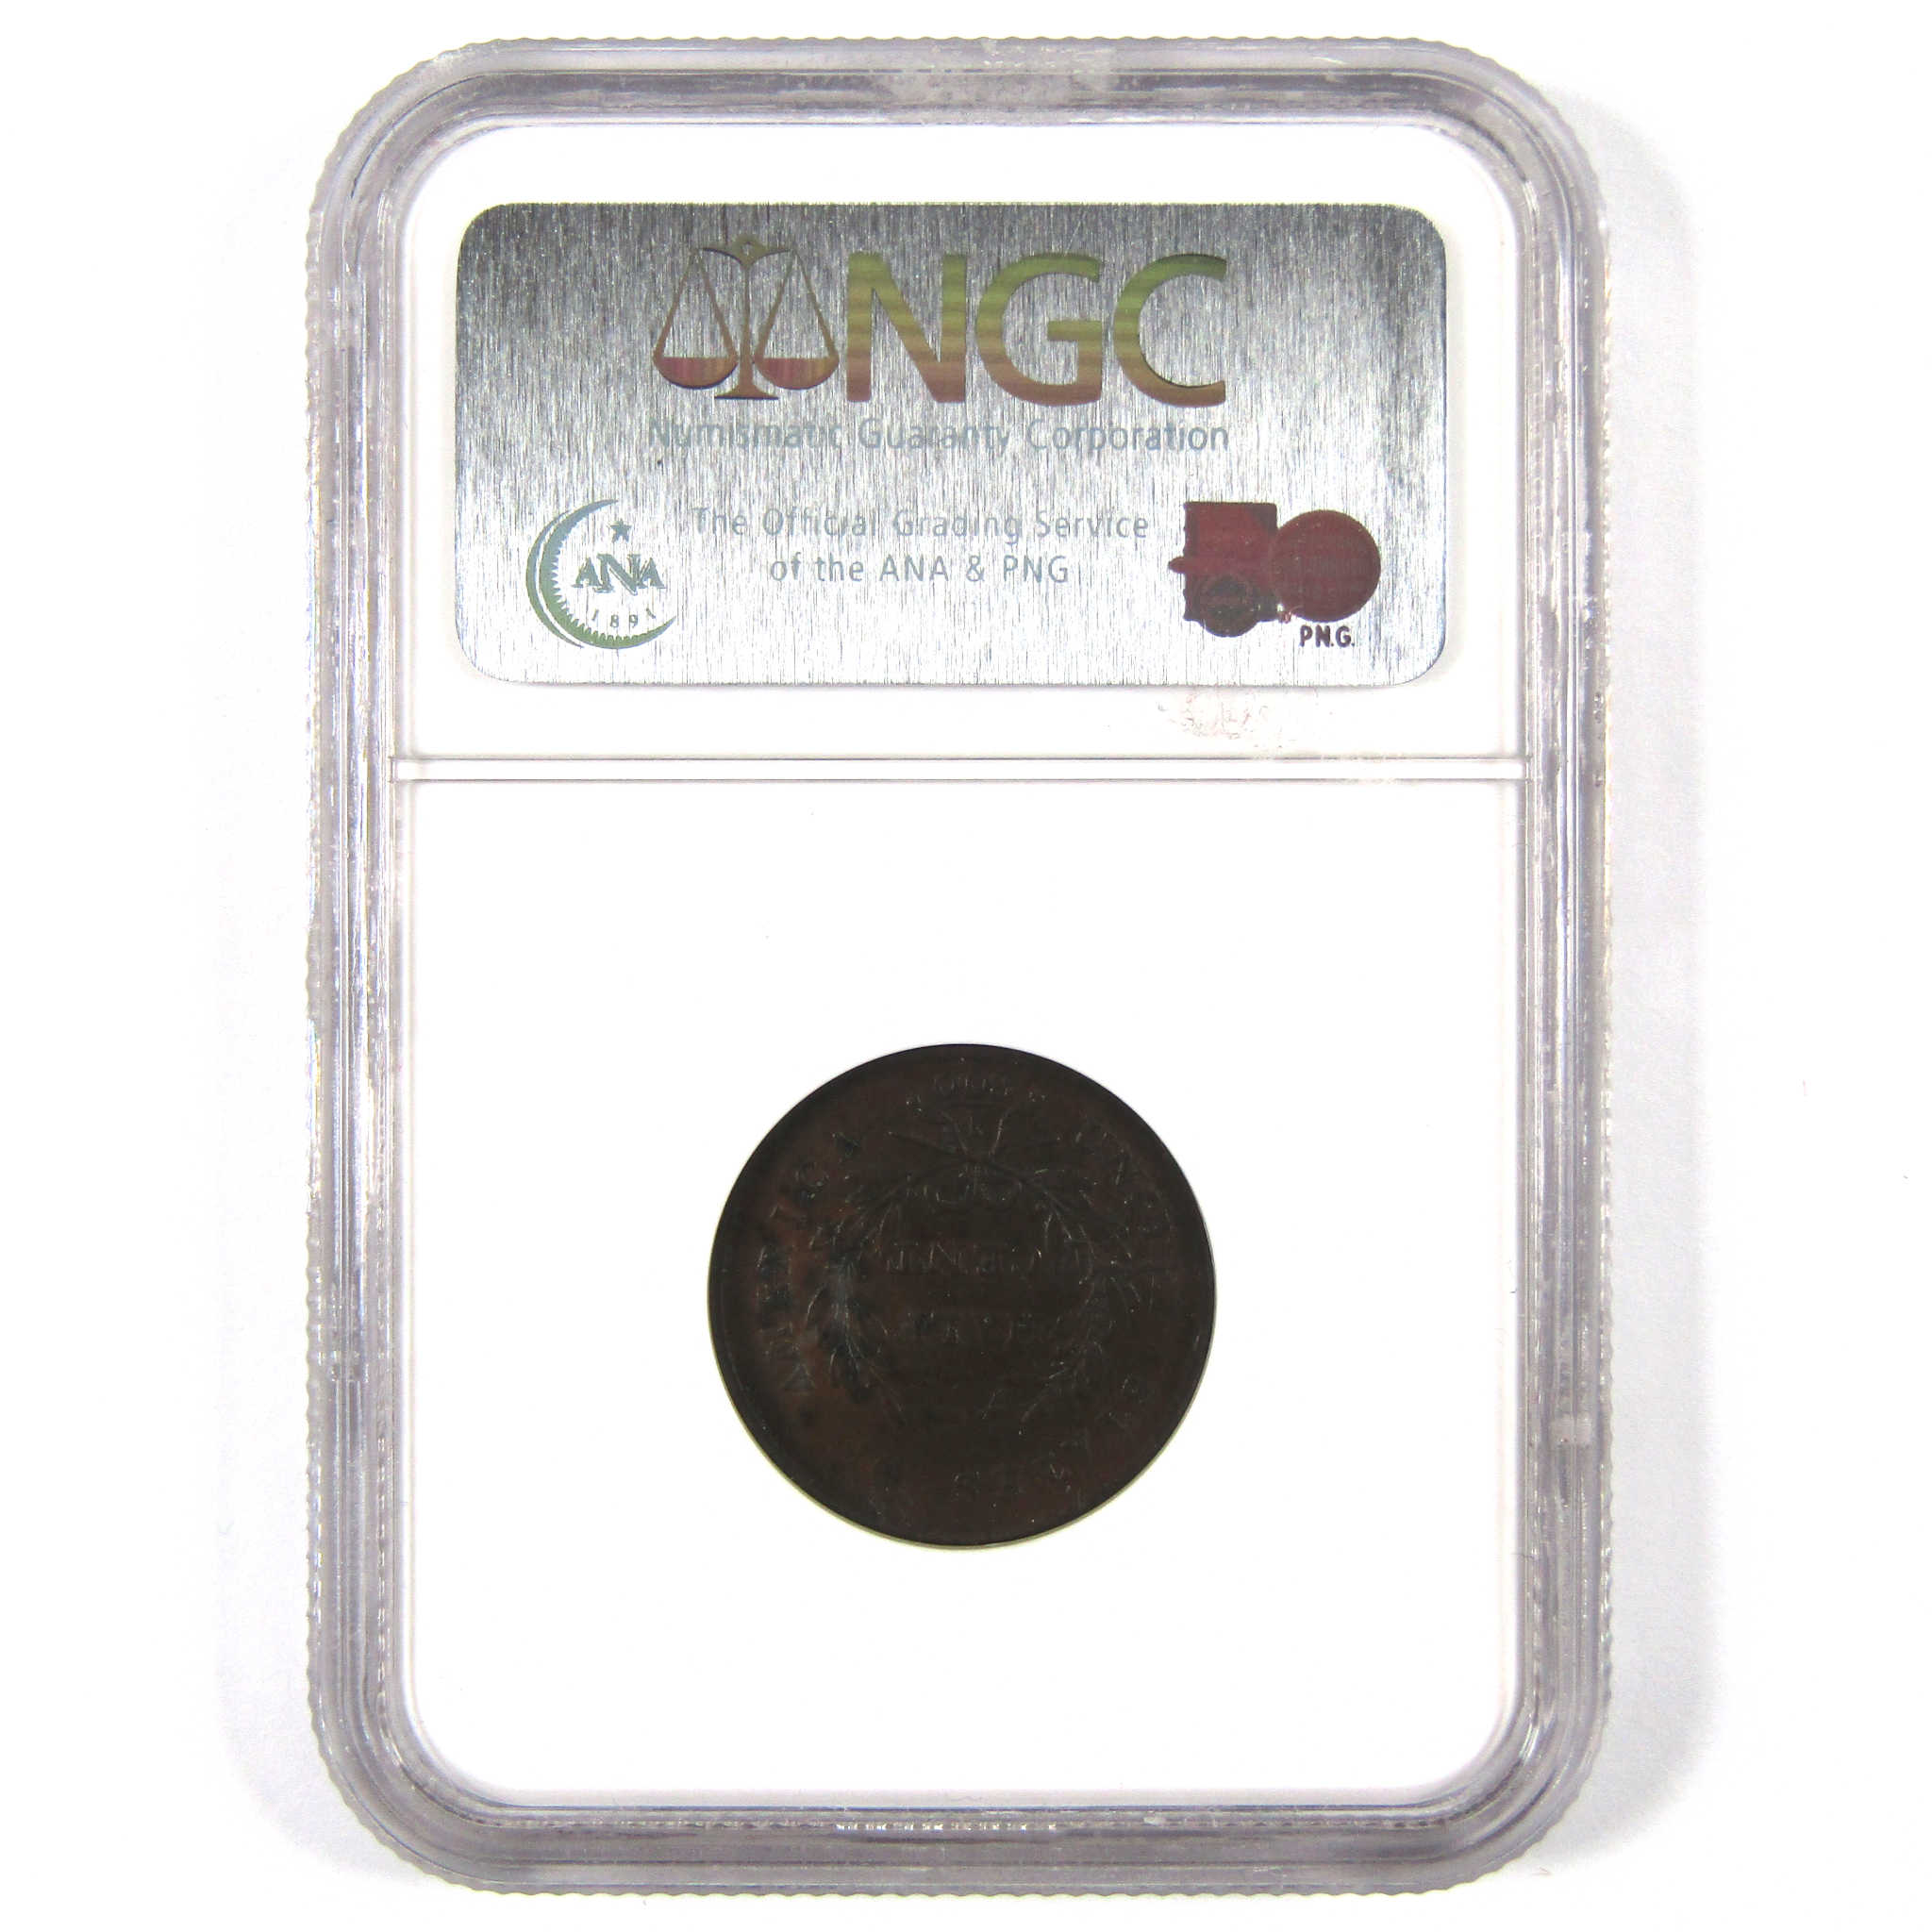 1800 Draped Bust Half Cent XF 45 BN NGC Copper Penny 1/2c SKU:I8787